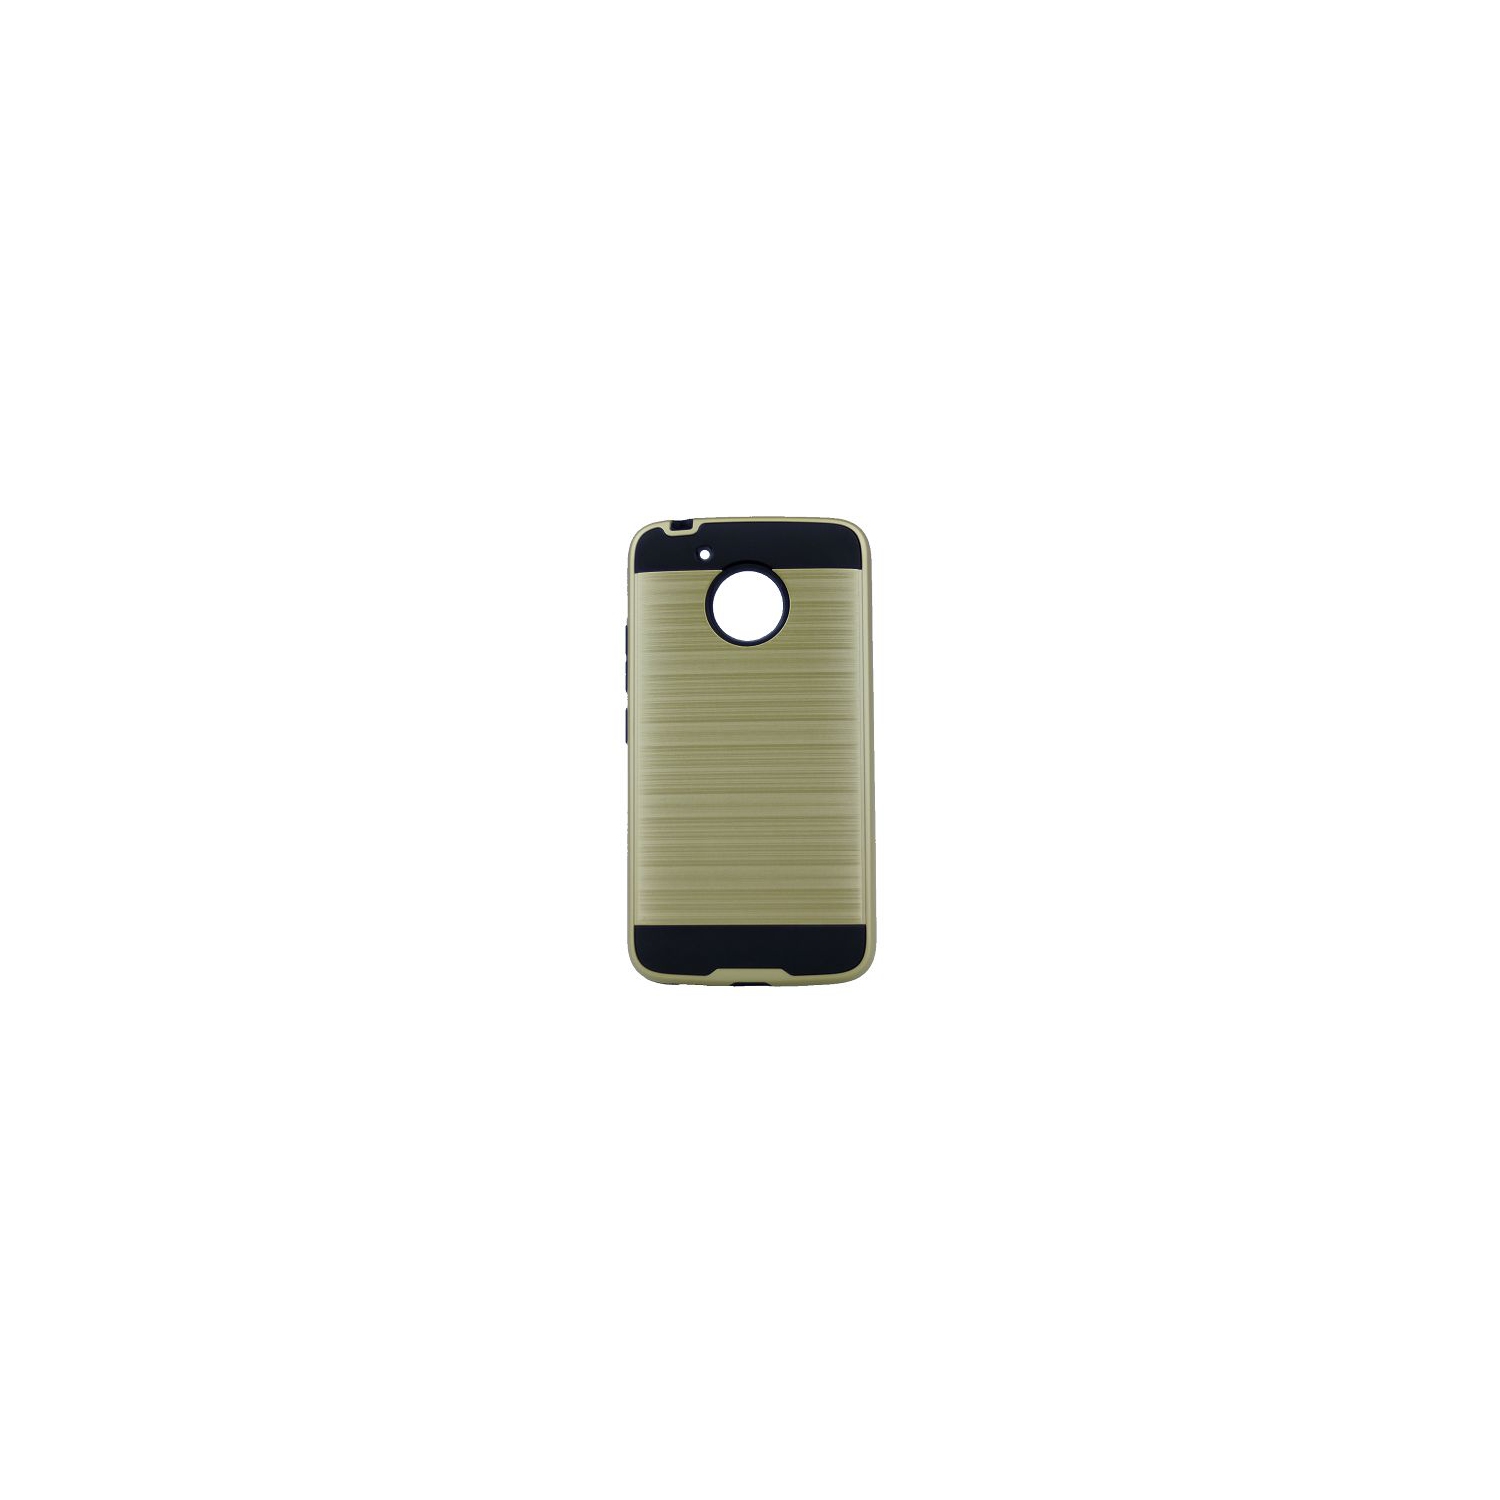 Moto G5 Plus Blush Texture Hard Cover Case, Gold